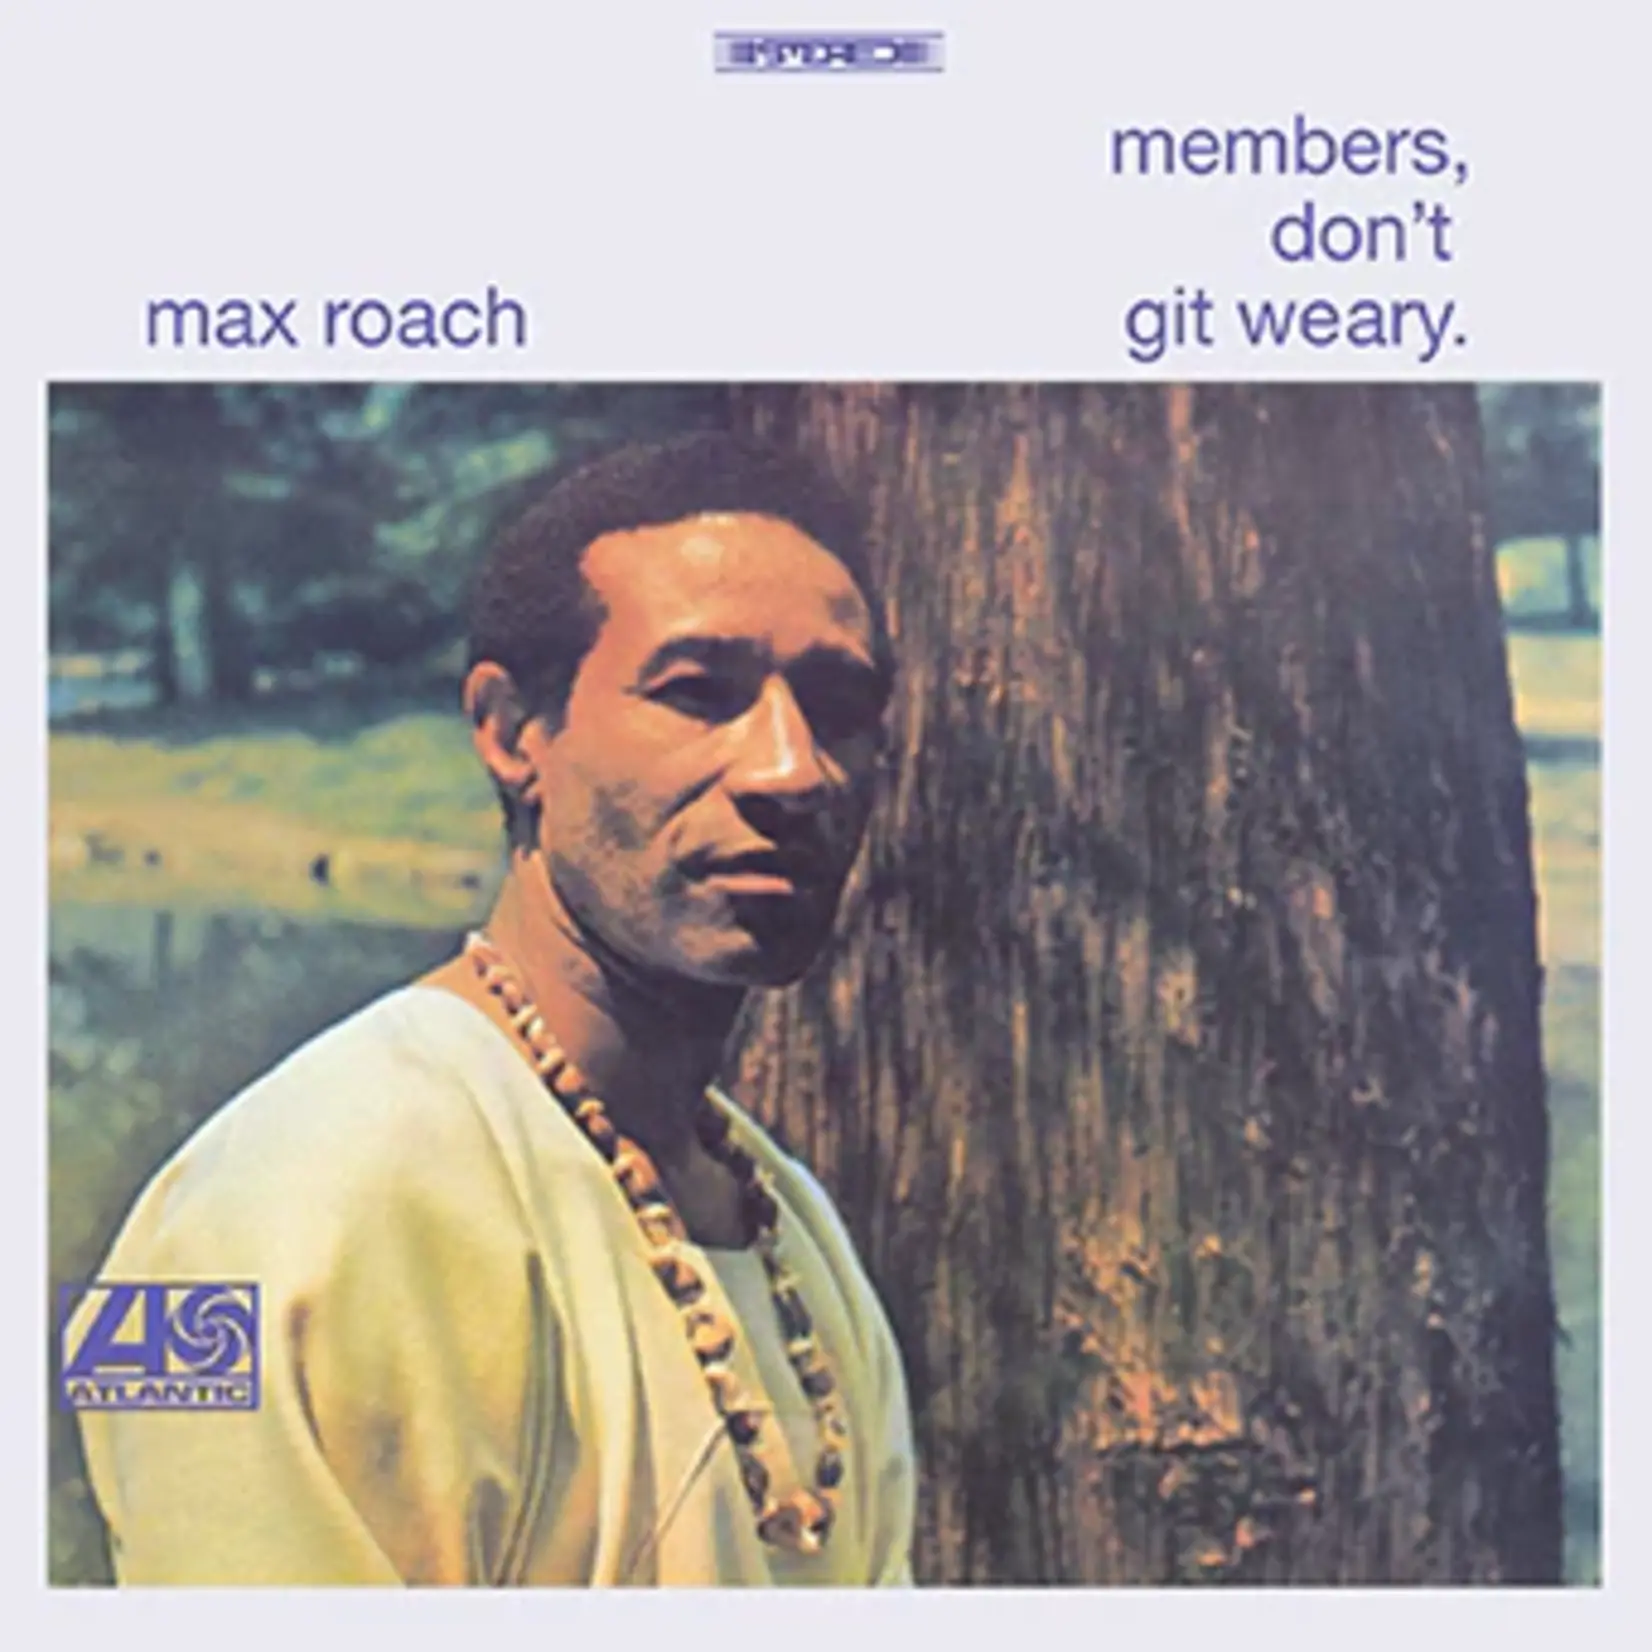 (PRE-ORDER) MAX ROACH  - MEMBERS, DON'T GIT WEARY  - LP